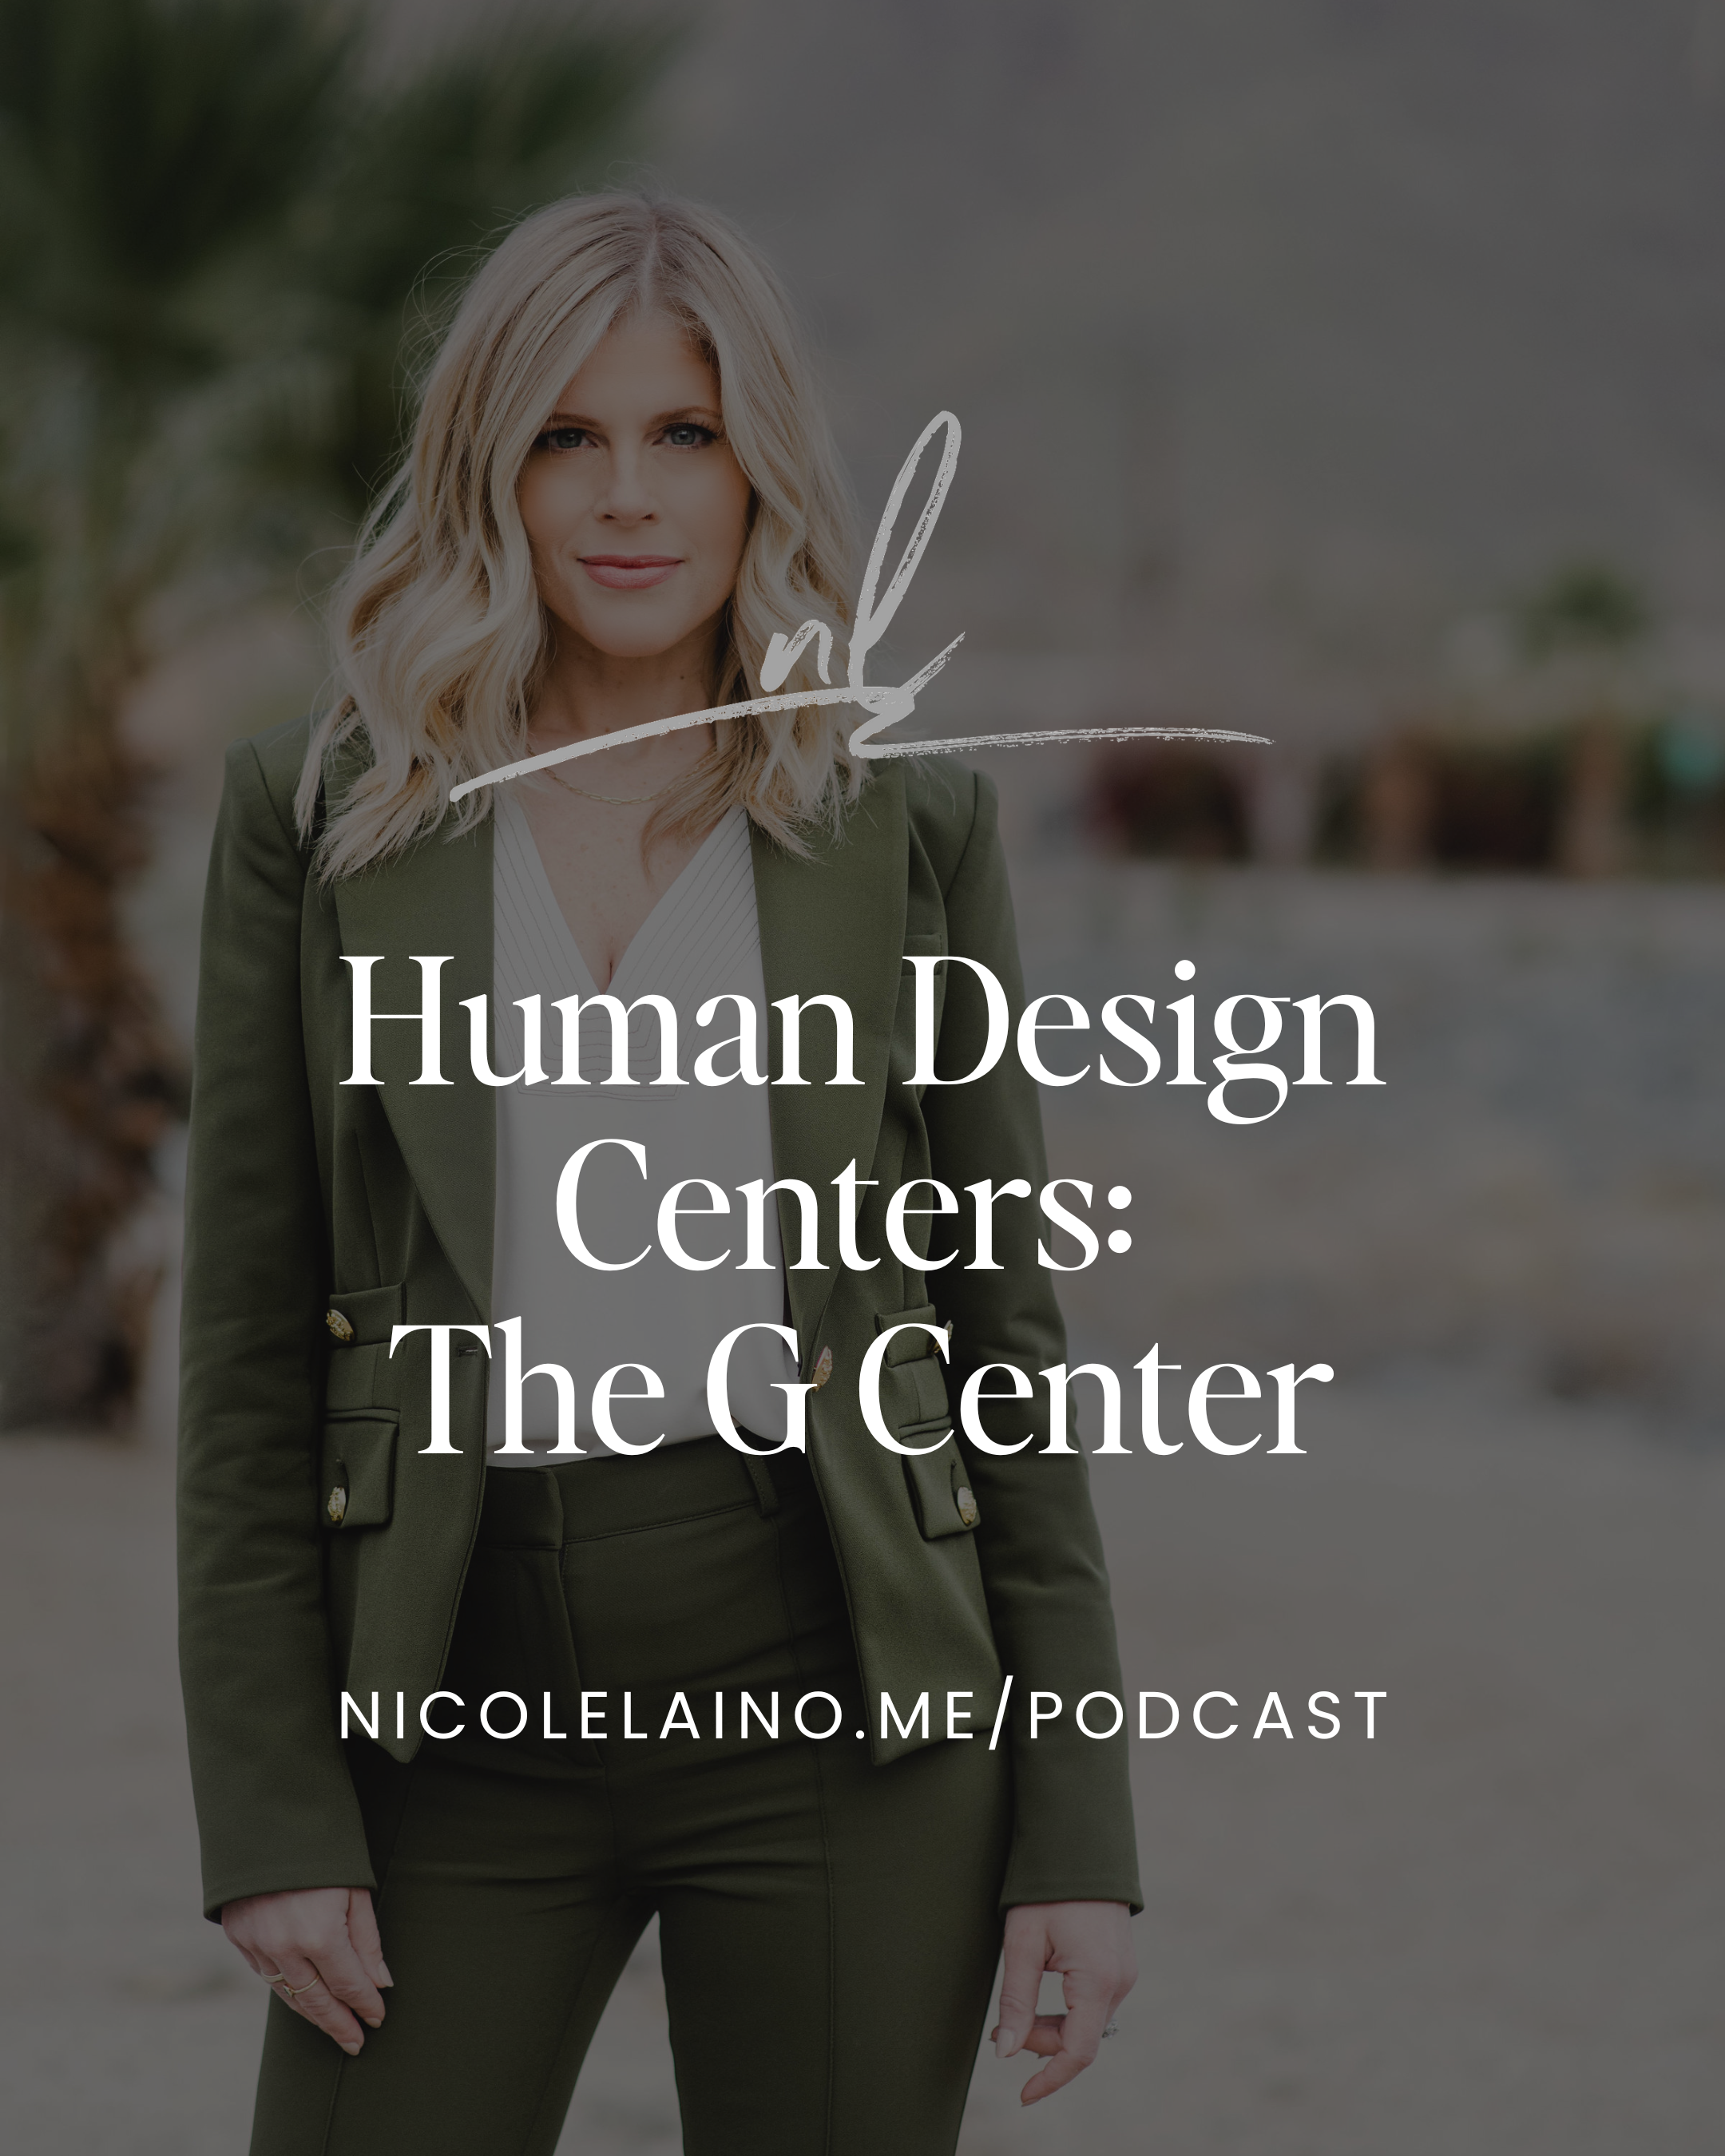 Human Design Centers: The G Center